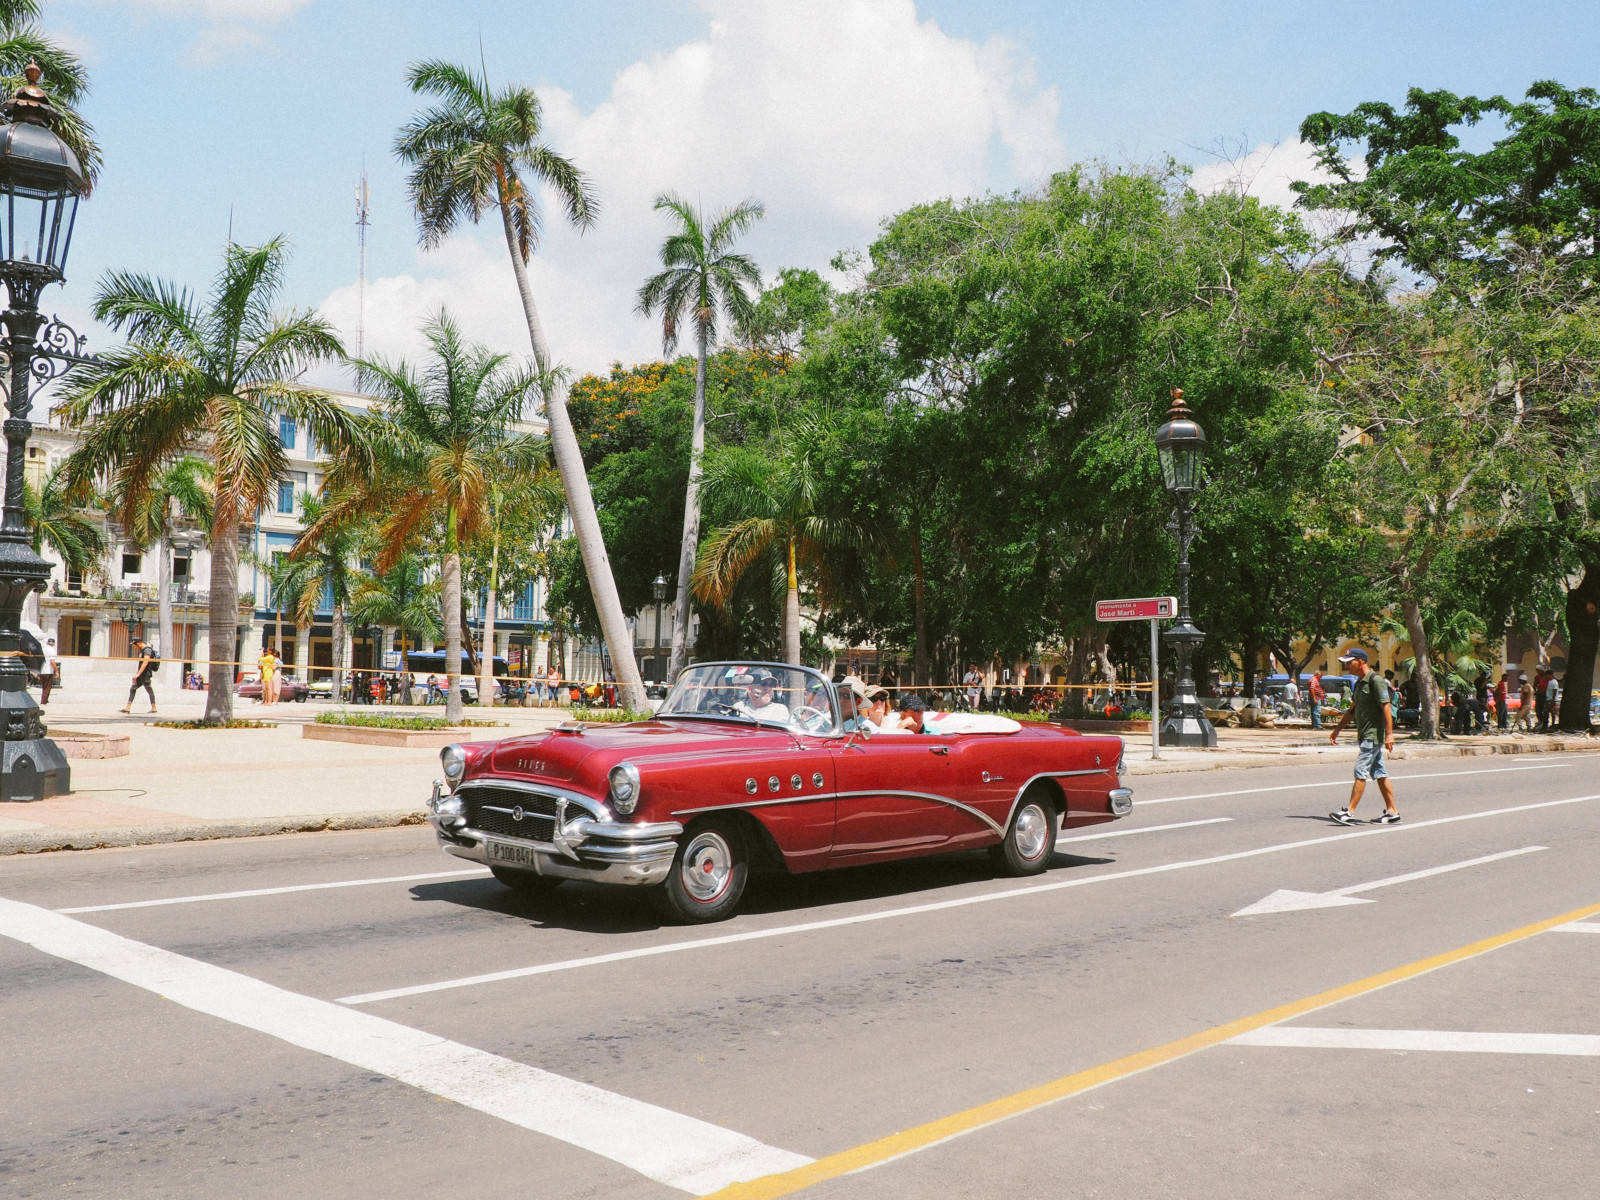 An old classic car in Havana